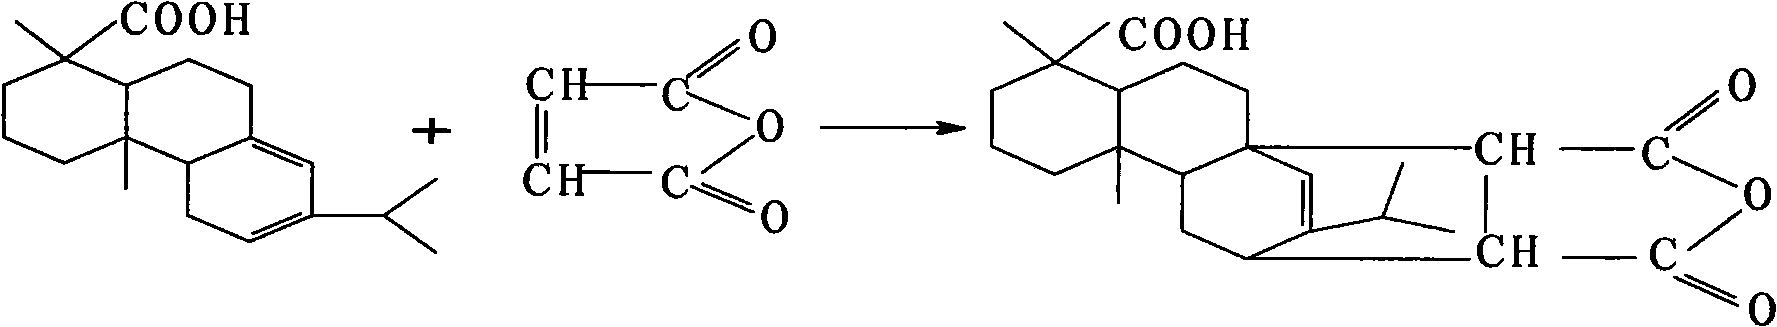 Preparation of maleated rosin polyethenoxy ether diester carboxyl acid natrium surfactant